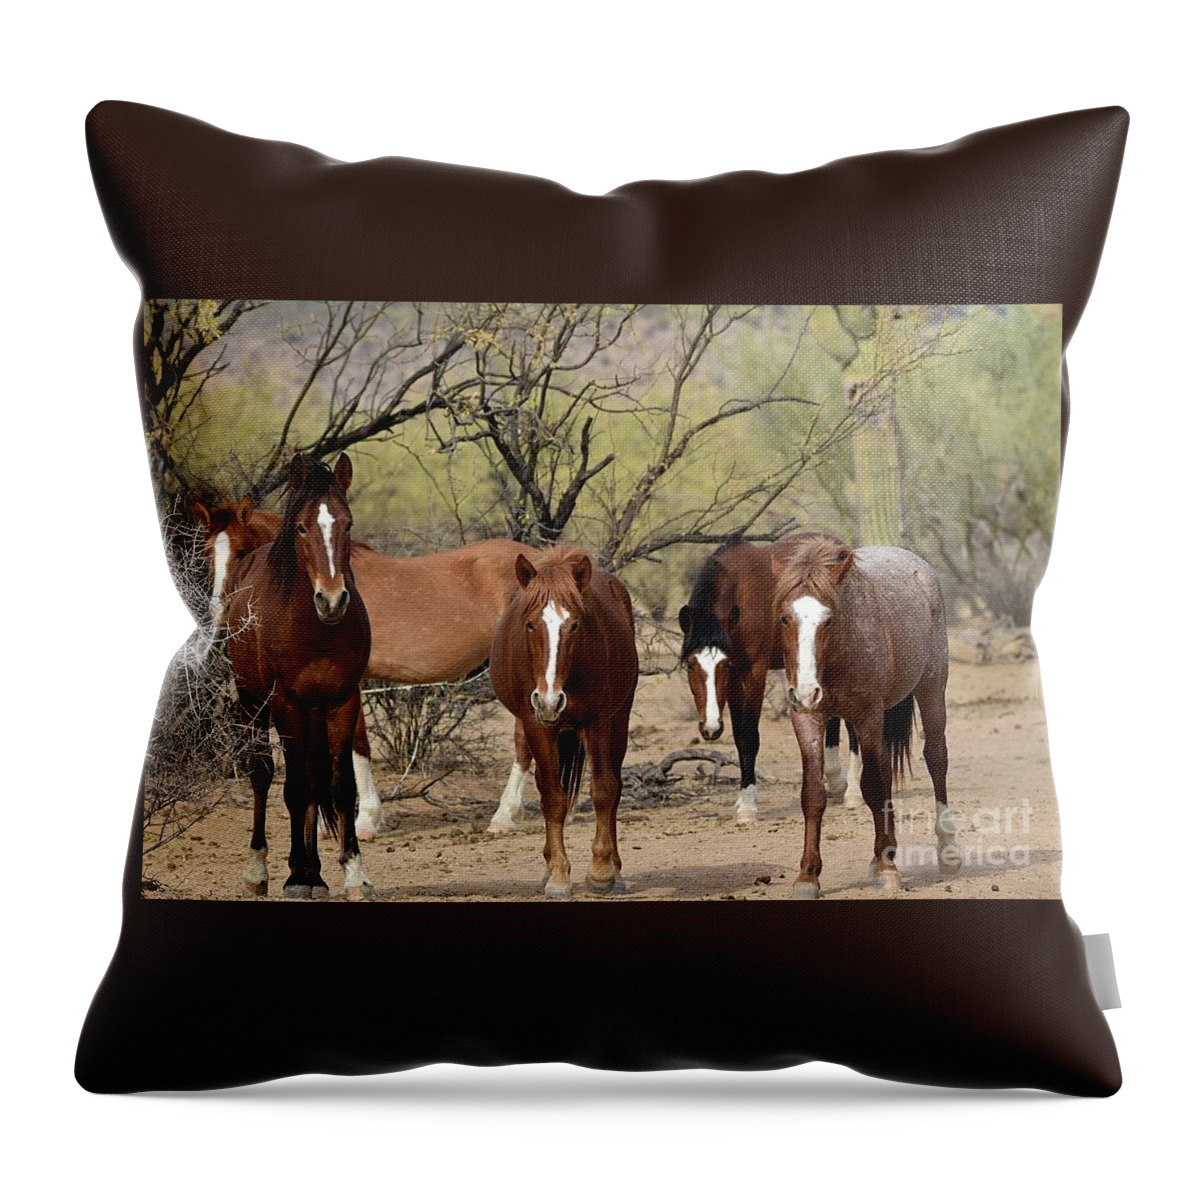 Salt River Wild Horse Throw Pillow featuring the digital art Blazes of Glory by Tammy Keyes